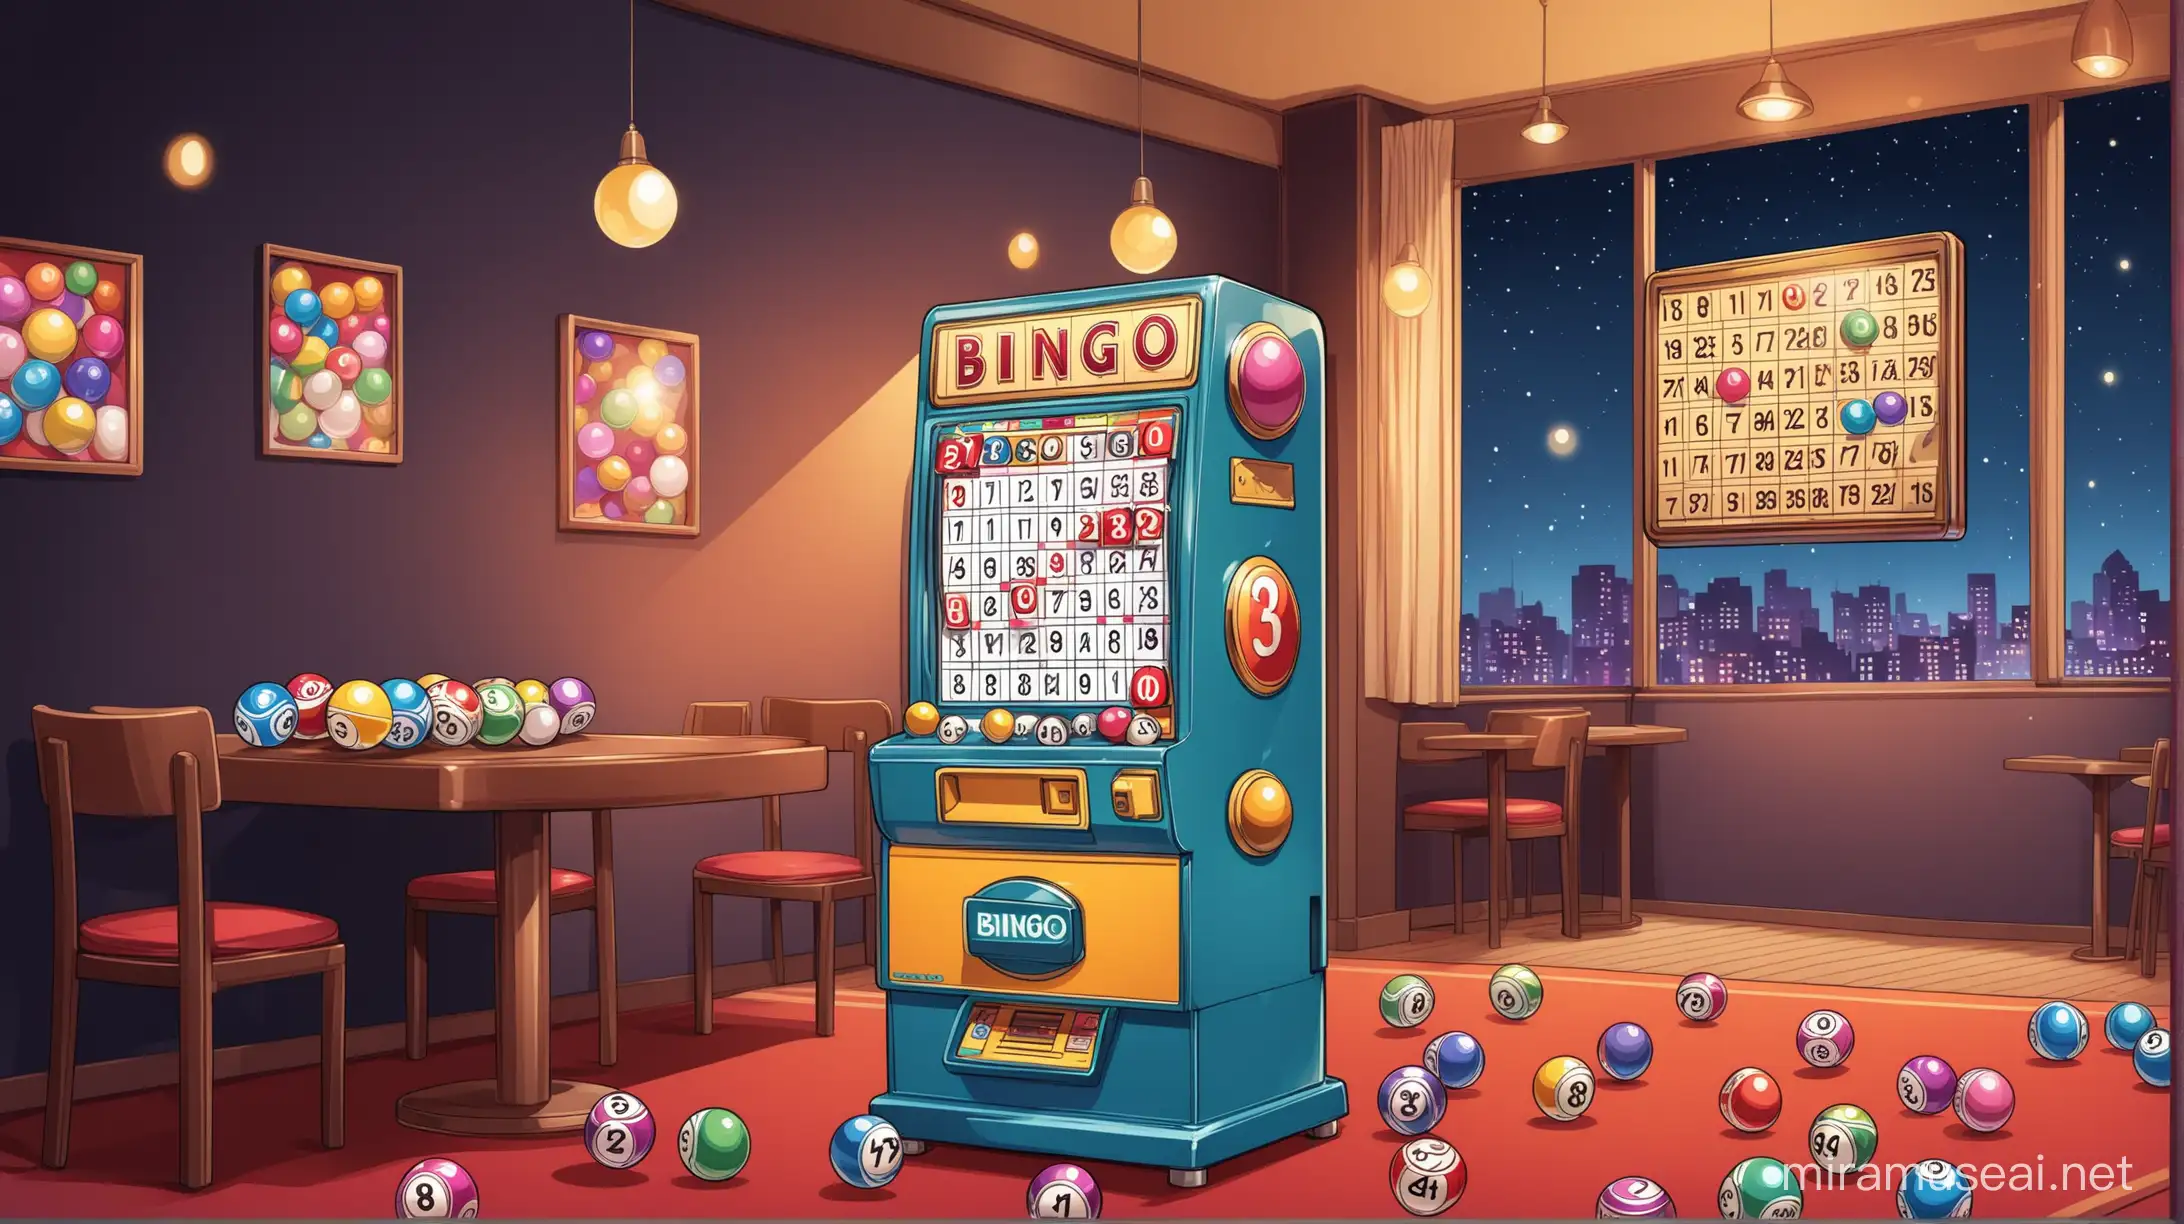 Minimalist Bingo Ball Flight with Machine and Cartoon Room Accessories